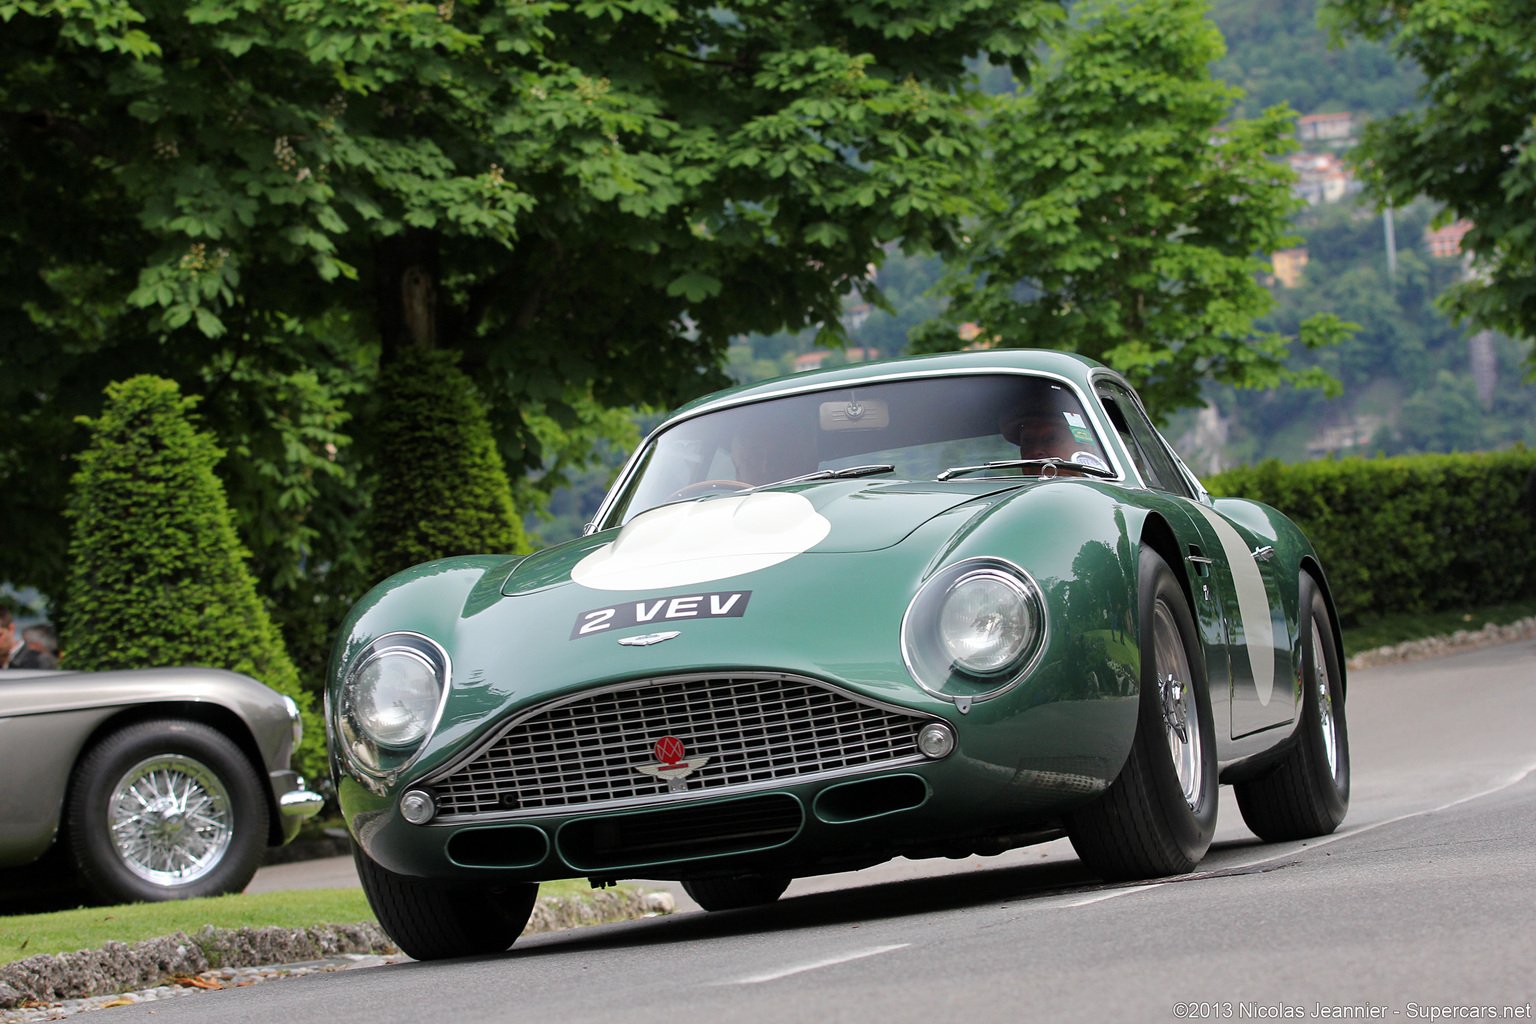 race, Car, Classic, Vehicle, Racing, Aston martin, Green, England Wallpaper